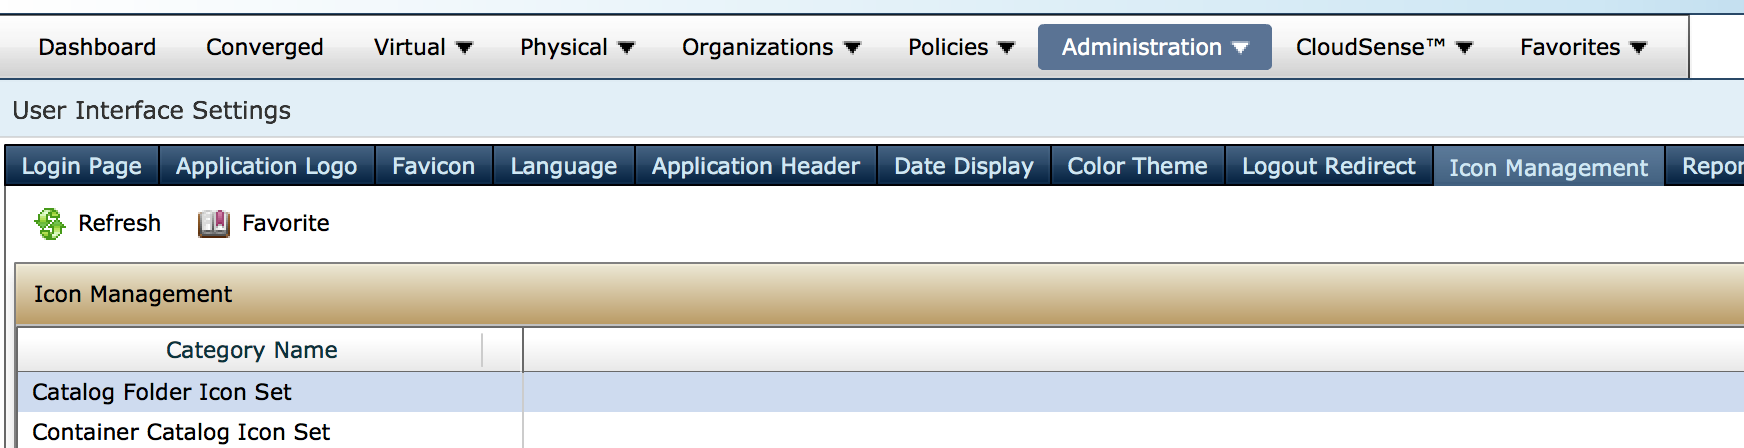 UCSD Portal Folder Icons - Cisco Community